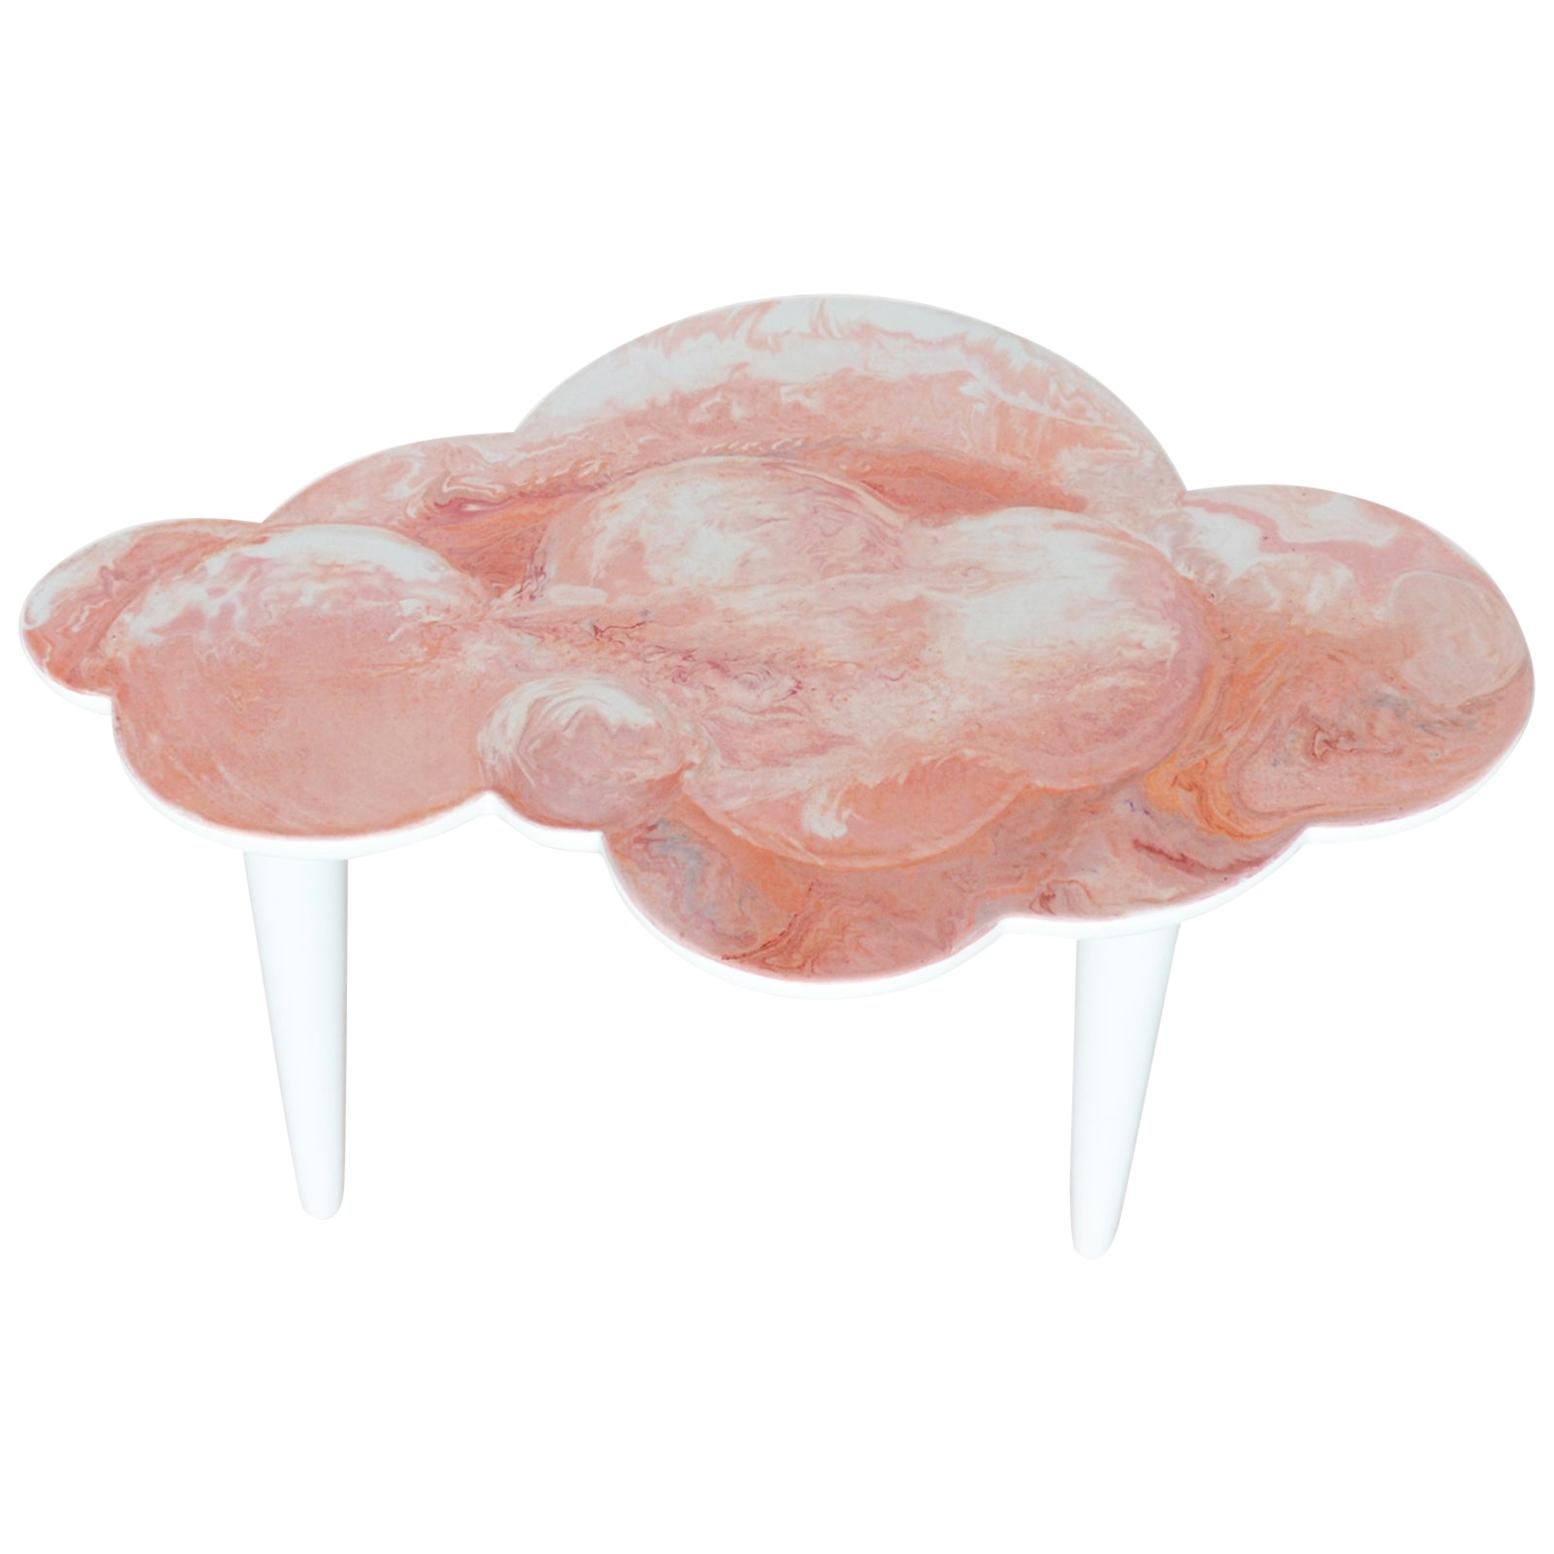 Cupioli Cloud Coffee Table  Scagliola Art Top Wooden  Legs Handmade in Italy